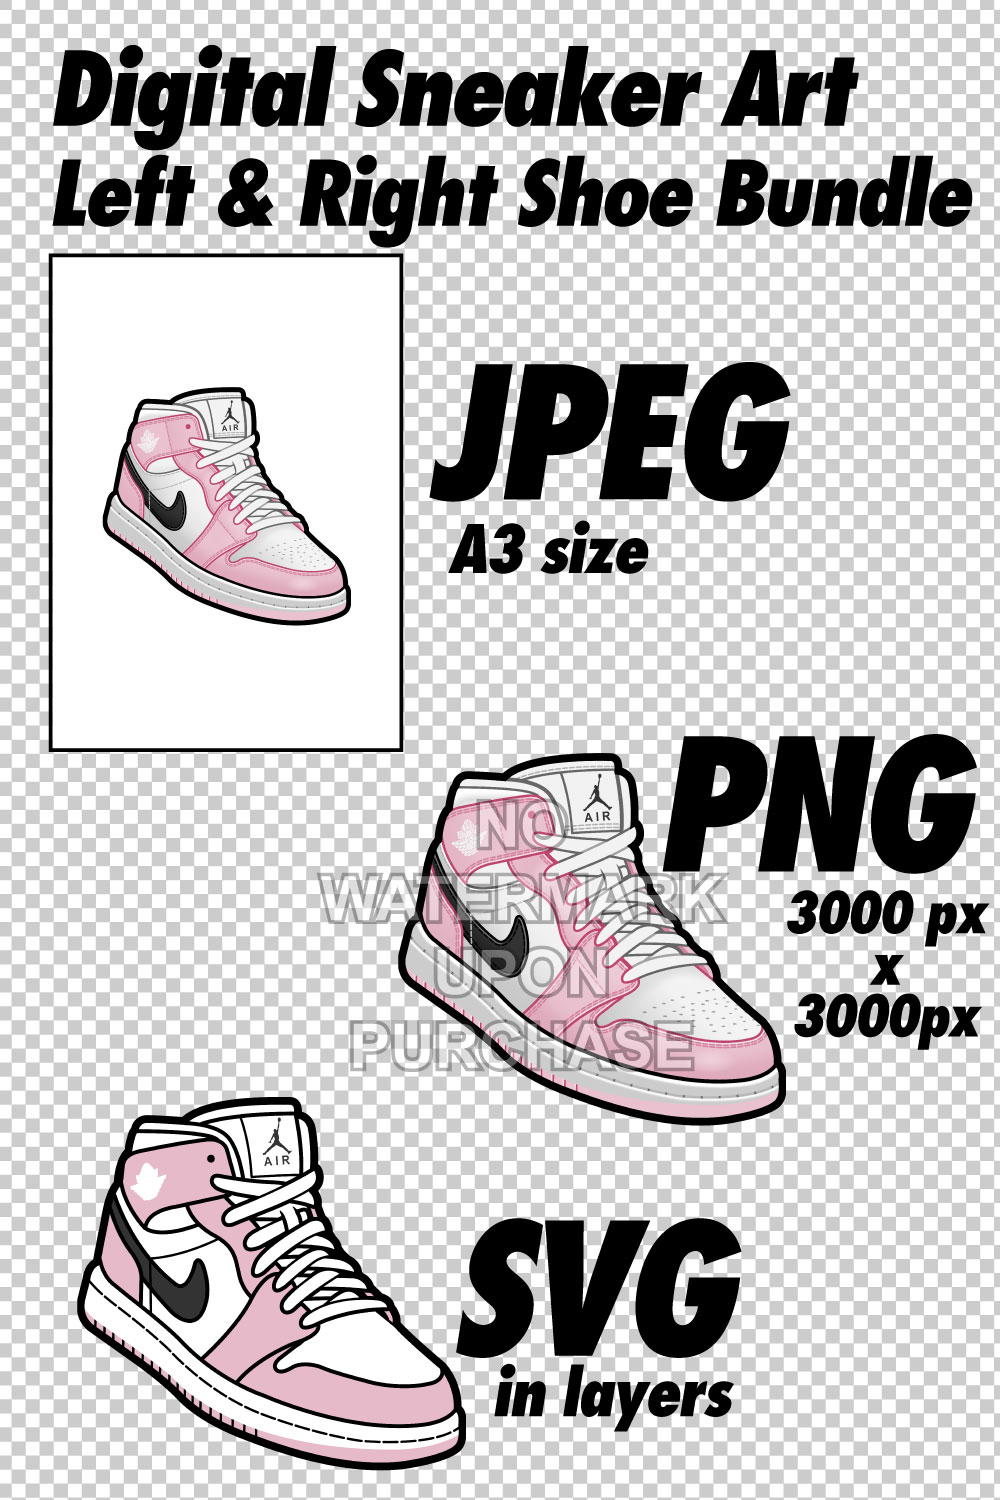 Air Jordan 1 MID White Pink Black JPEG PNG SVG Sneaker Art right & left shoe bundle Digital Download pinterest preview image.